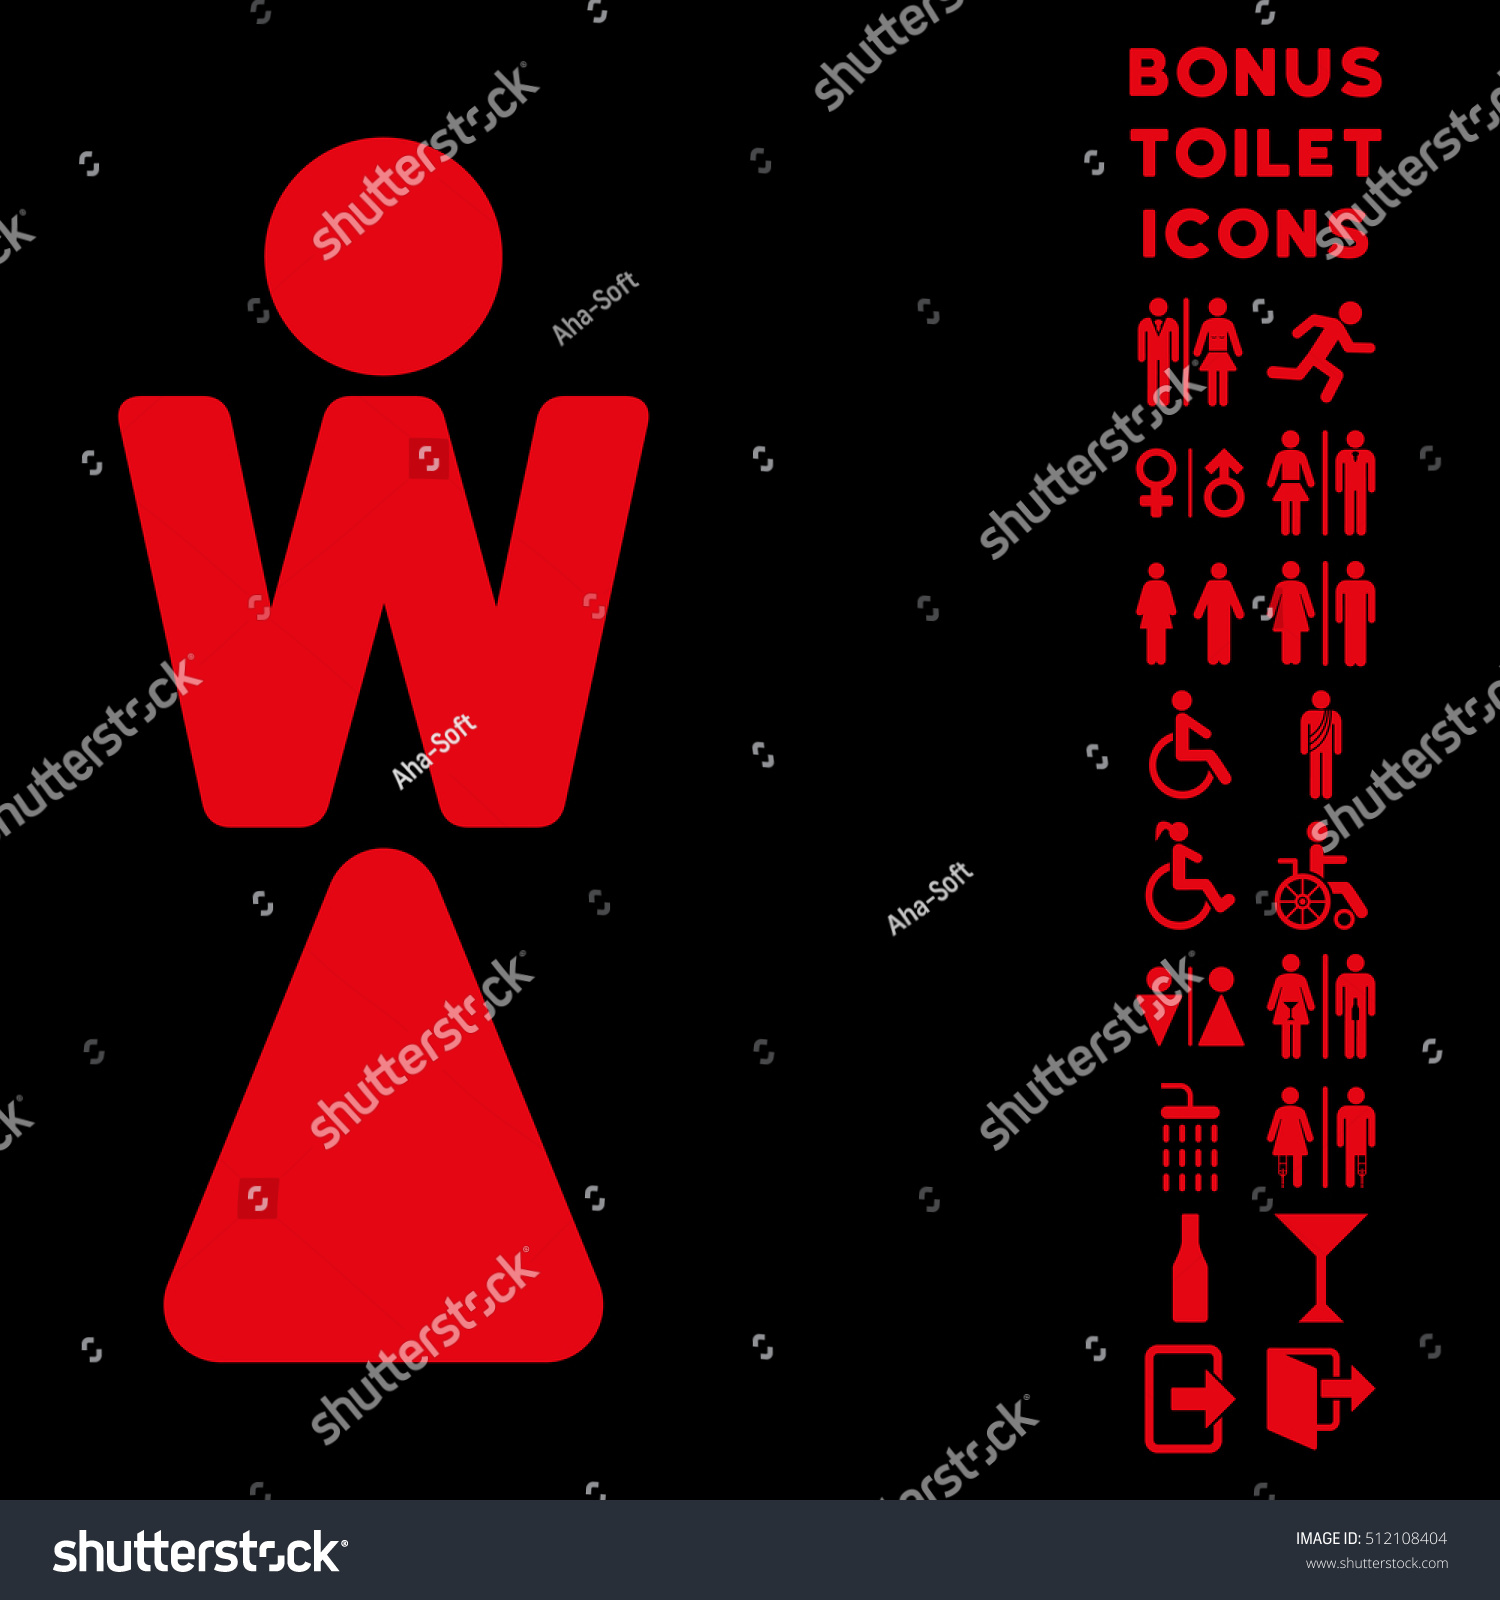 Woman Icon Bonus Male Female Toilet Stock Vector Royalty Free 512108404 Shutterstock